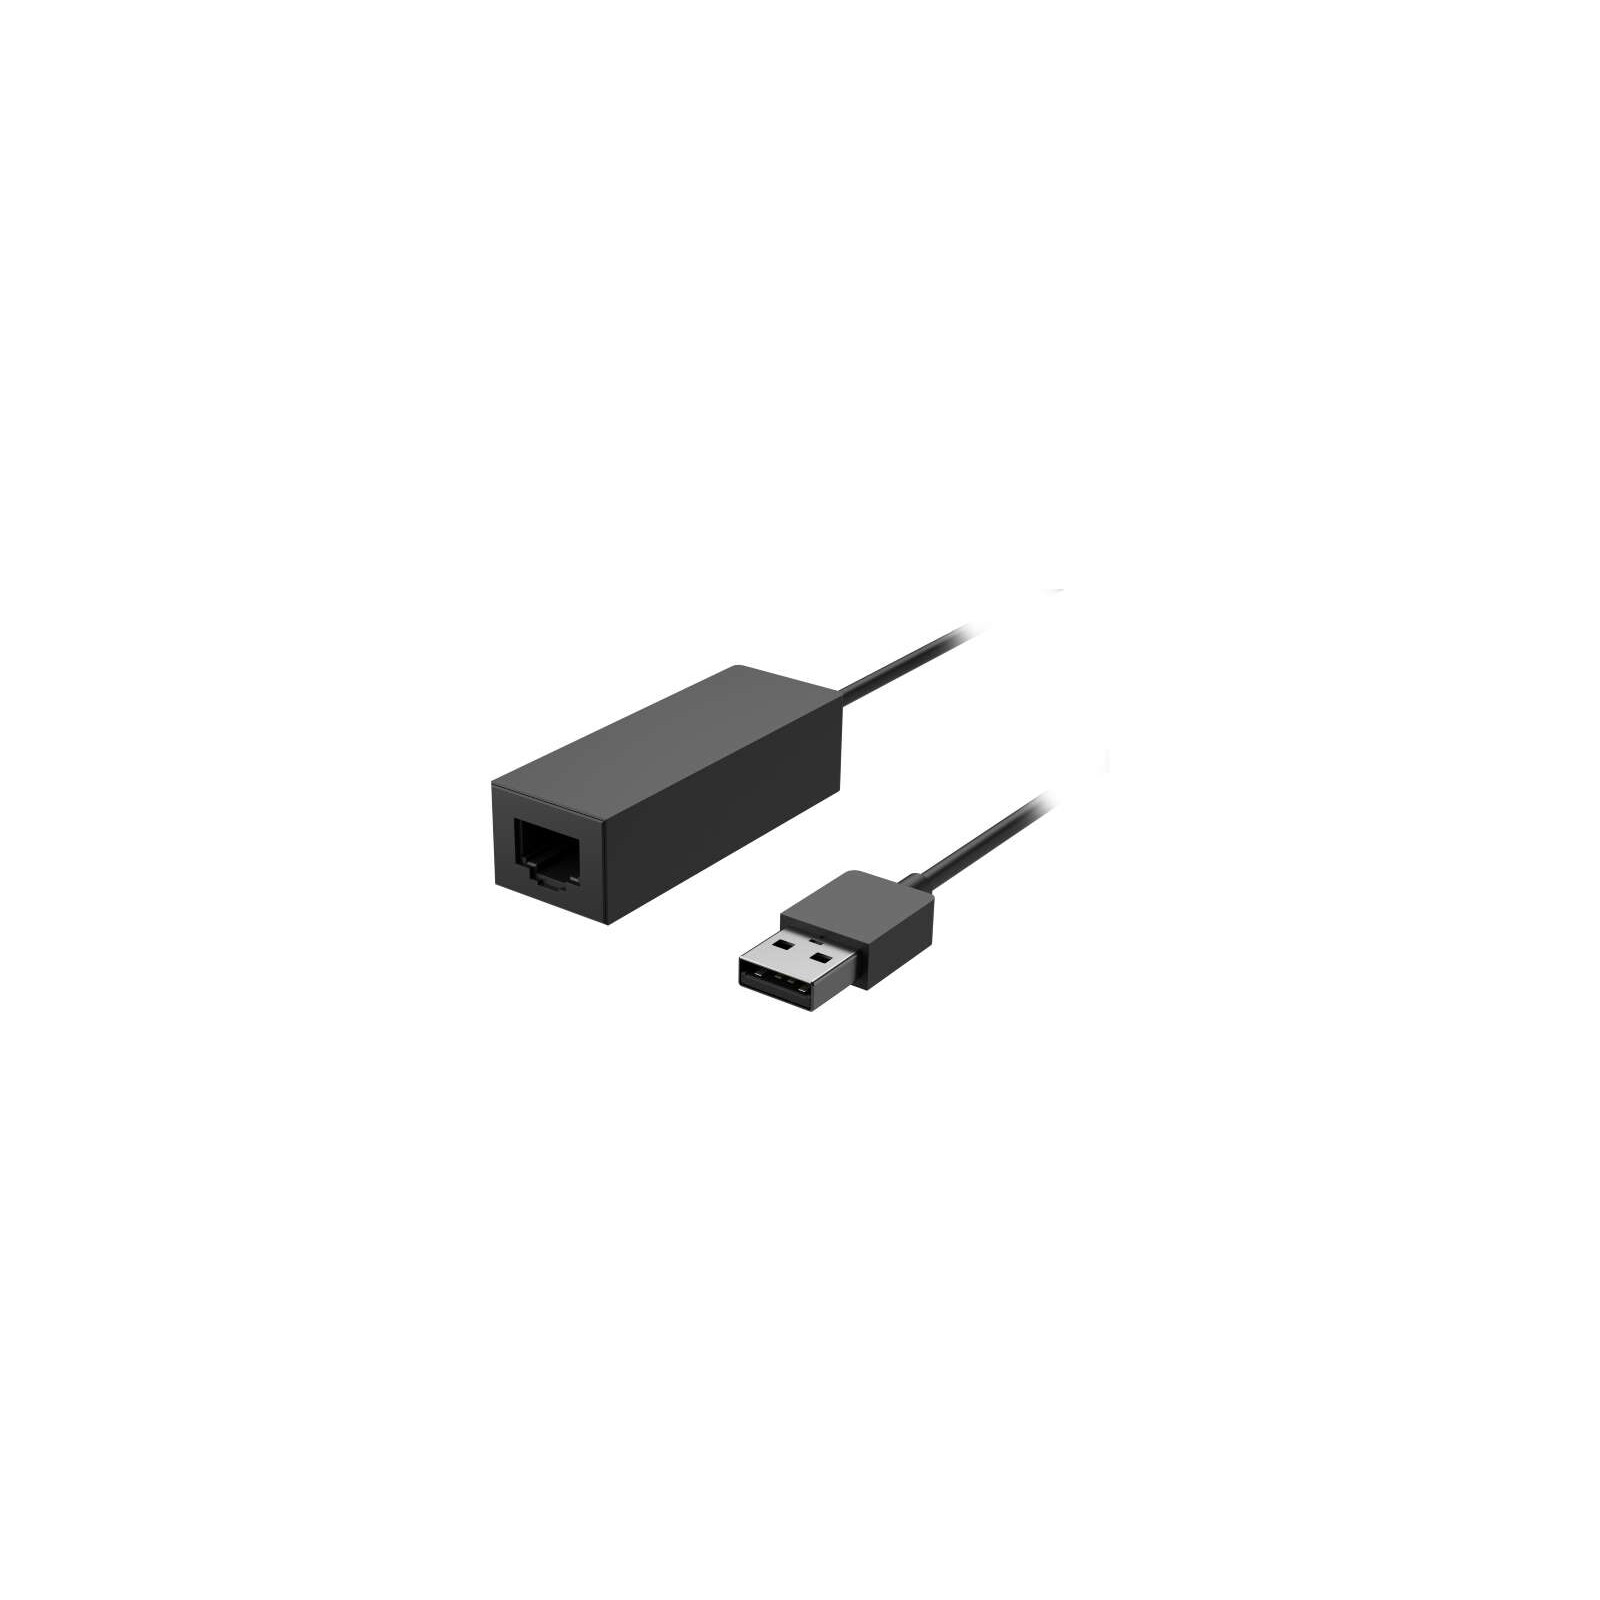 Microsoft Surface USB 3.0 Gigabit Ethernet Adapter